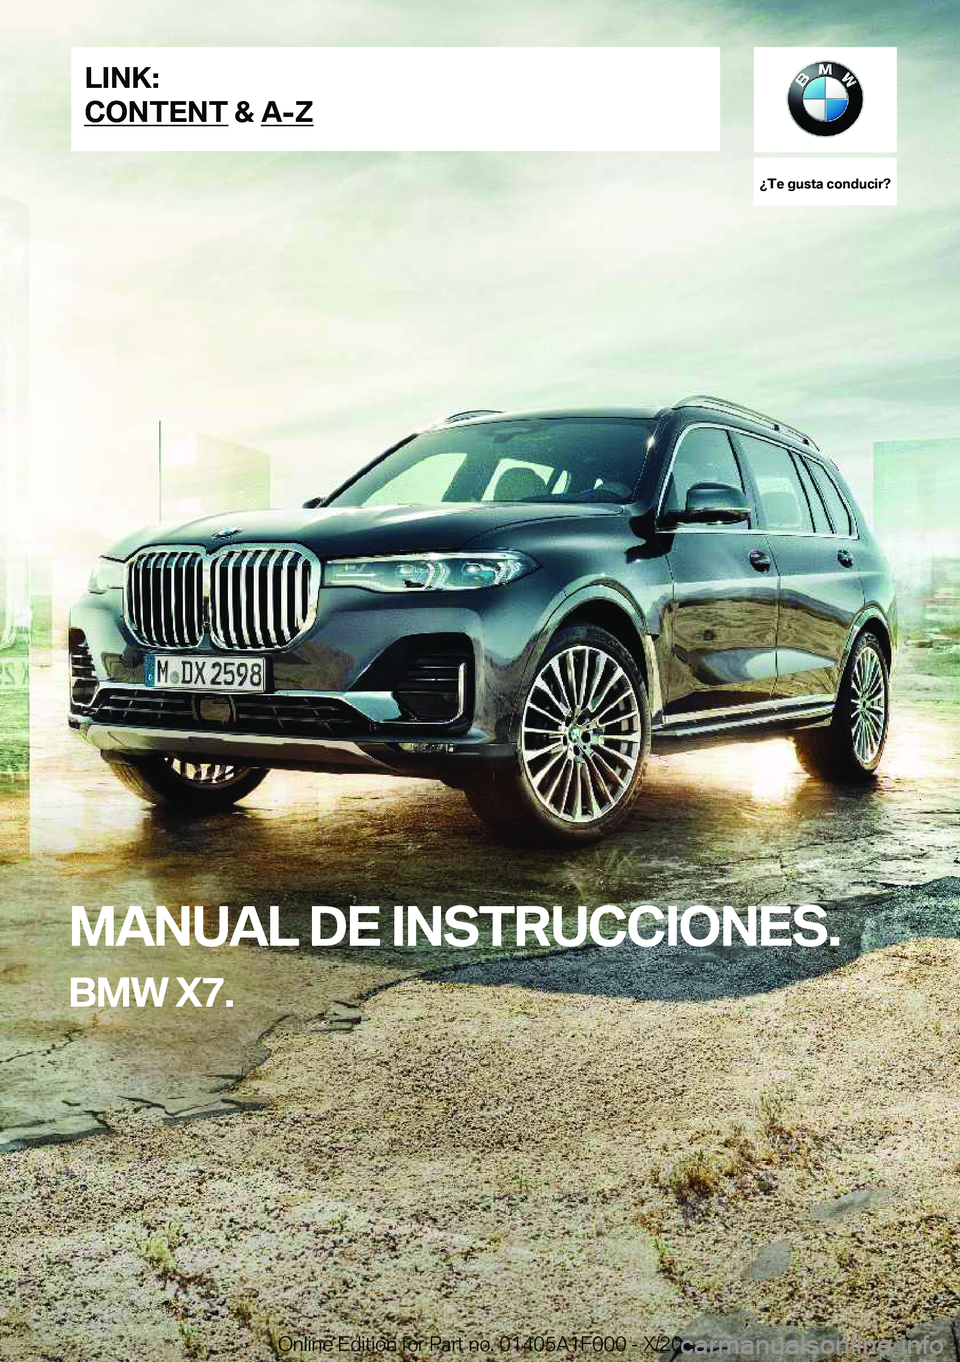 BMW X7 2021  Manuales de Empleo (in Spanish) ��T�e��g�u�s�t�a��c�o�n�d�u�c�i�r� 
�M�A�N�U�A�L��D�E��I�N�S�T�R�U�C�C�I�O�N�E�S�.
�B�M�W��X�7�.�L�I�N�K�:
�C�O�N�T�E�N�T��&��A�-�Z�O�n�l�i�n�e��E�d�i�t�i�o�n��f�o�r��P�a�r�t��n�o�.��0�1�